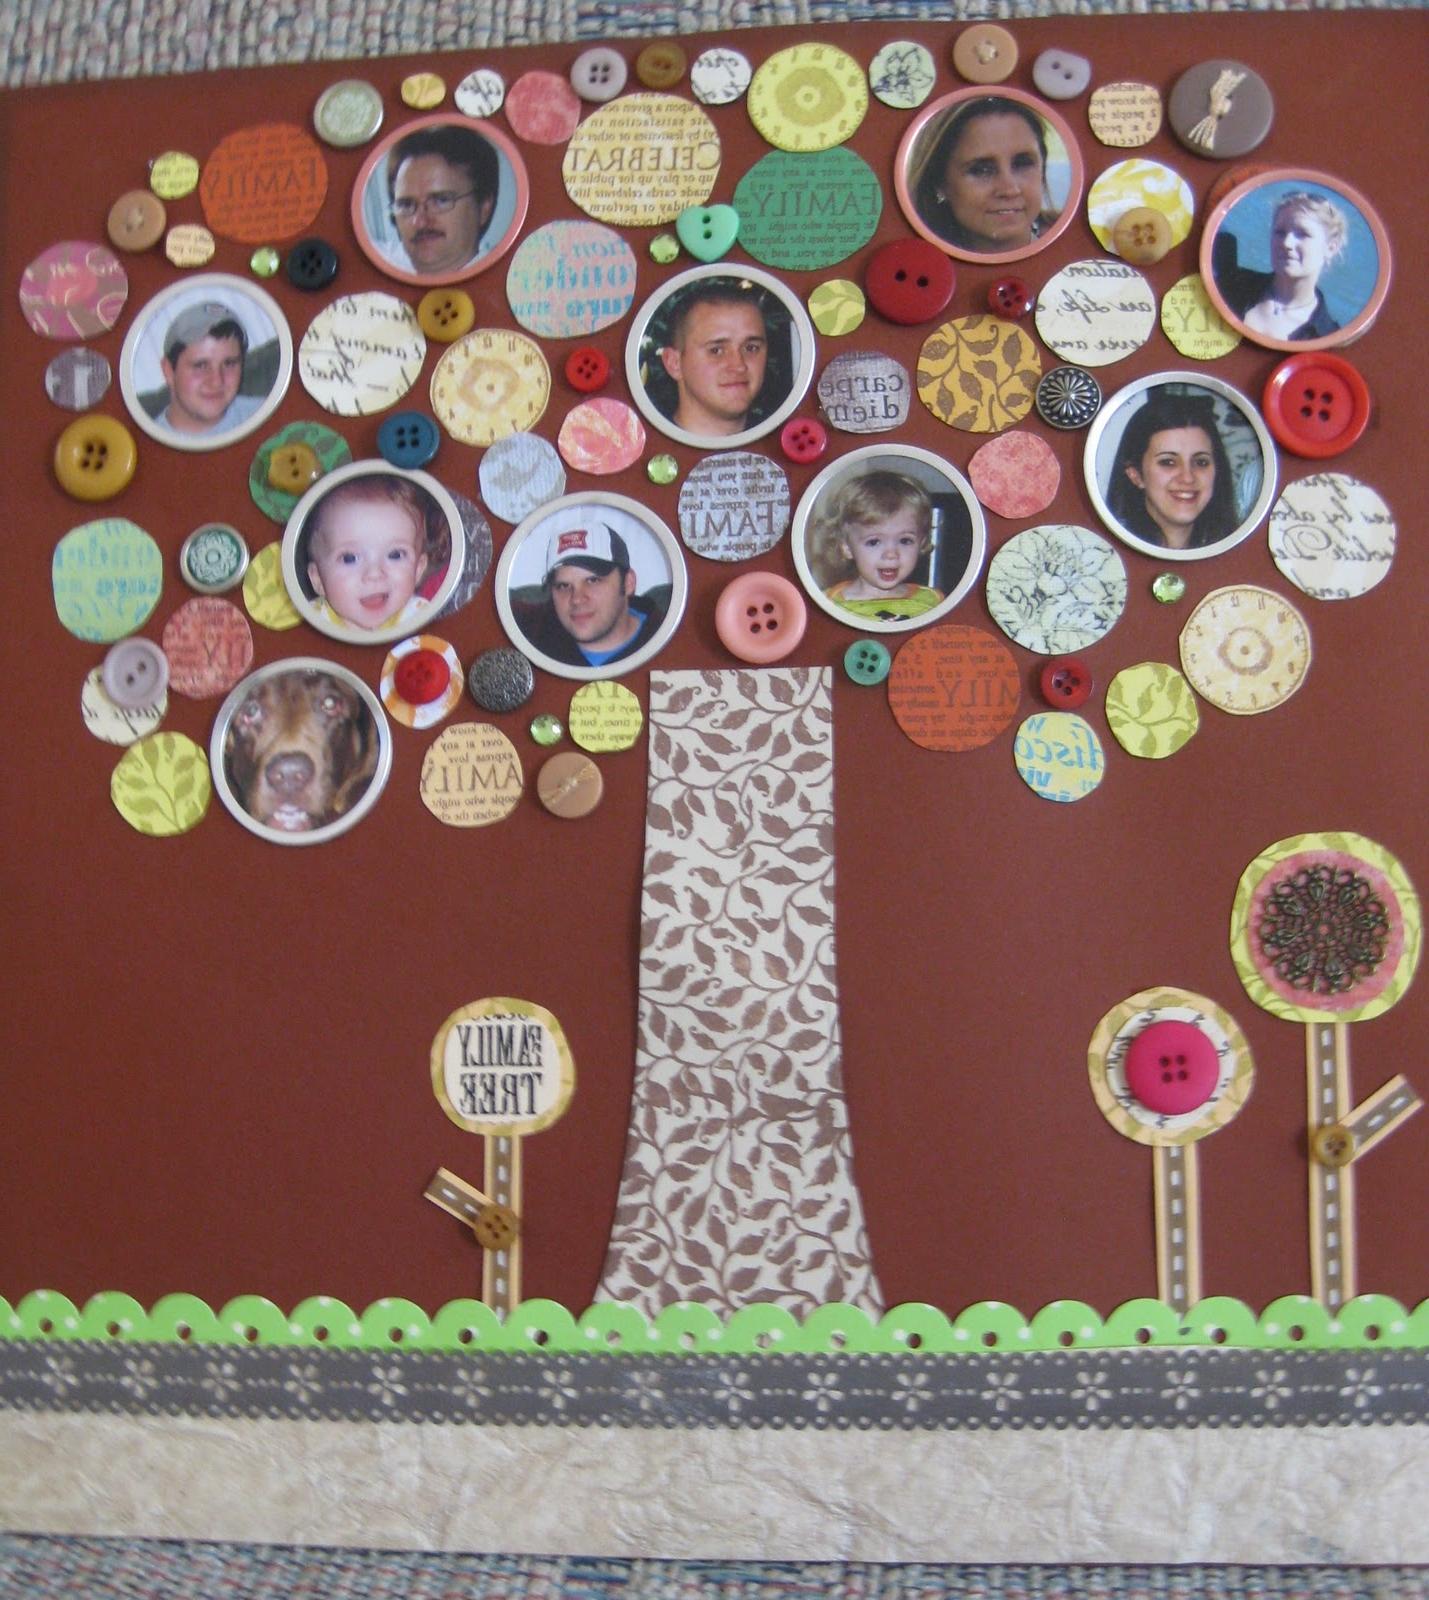  6: Family Tree   Embellishing Life.  7: Loopy Wreath   These Creative